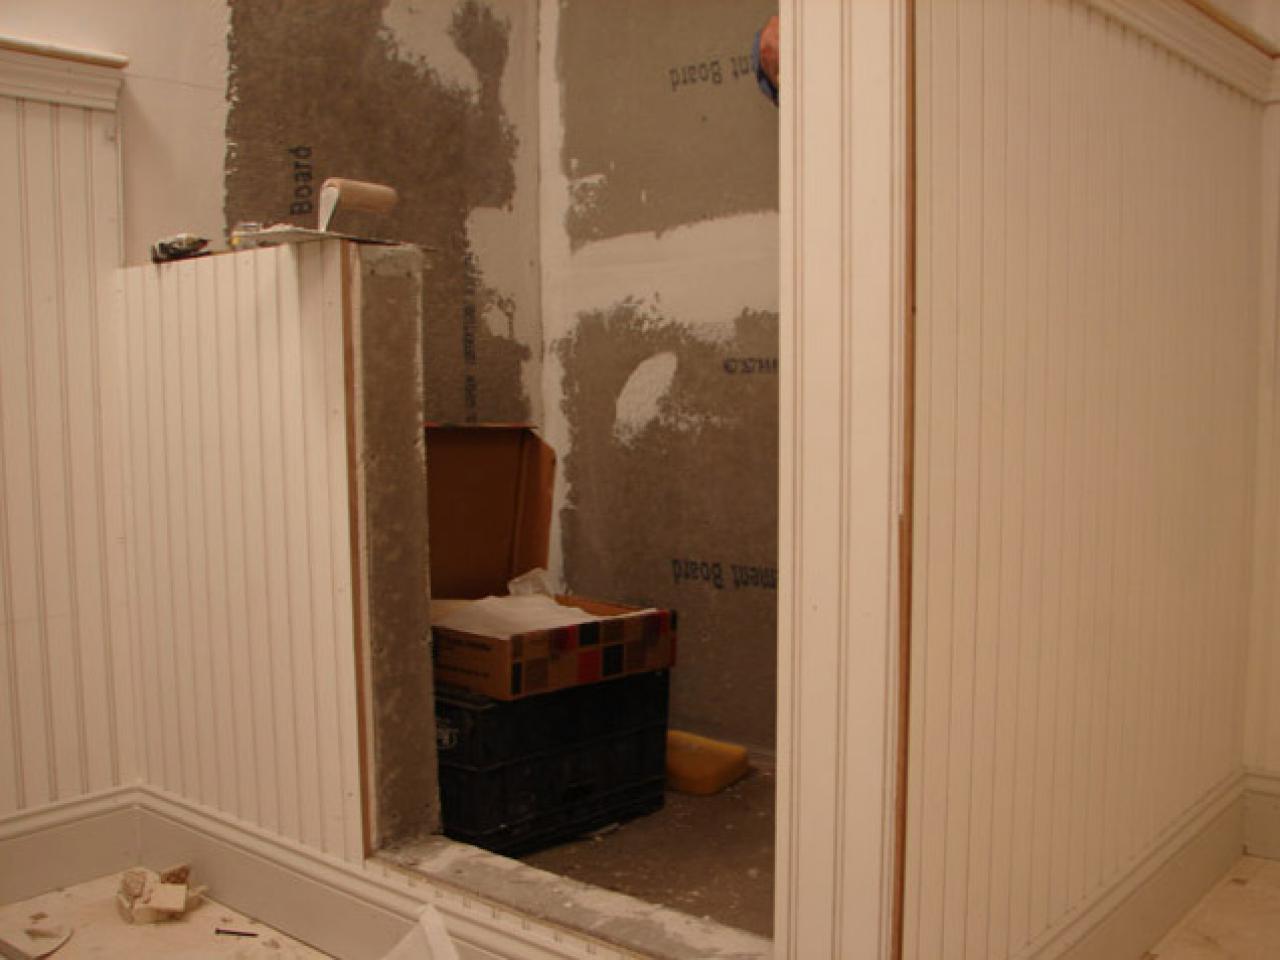 Install Tile In A Bathroom Shower, Diy Bathroom Wall Tile Removal